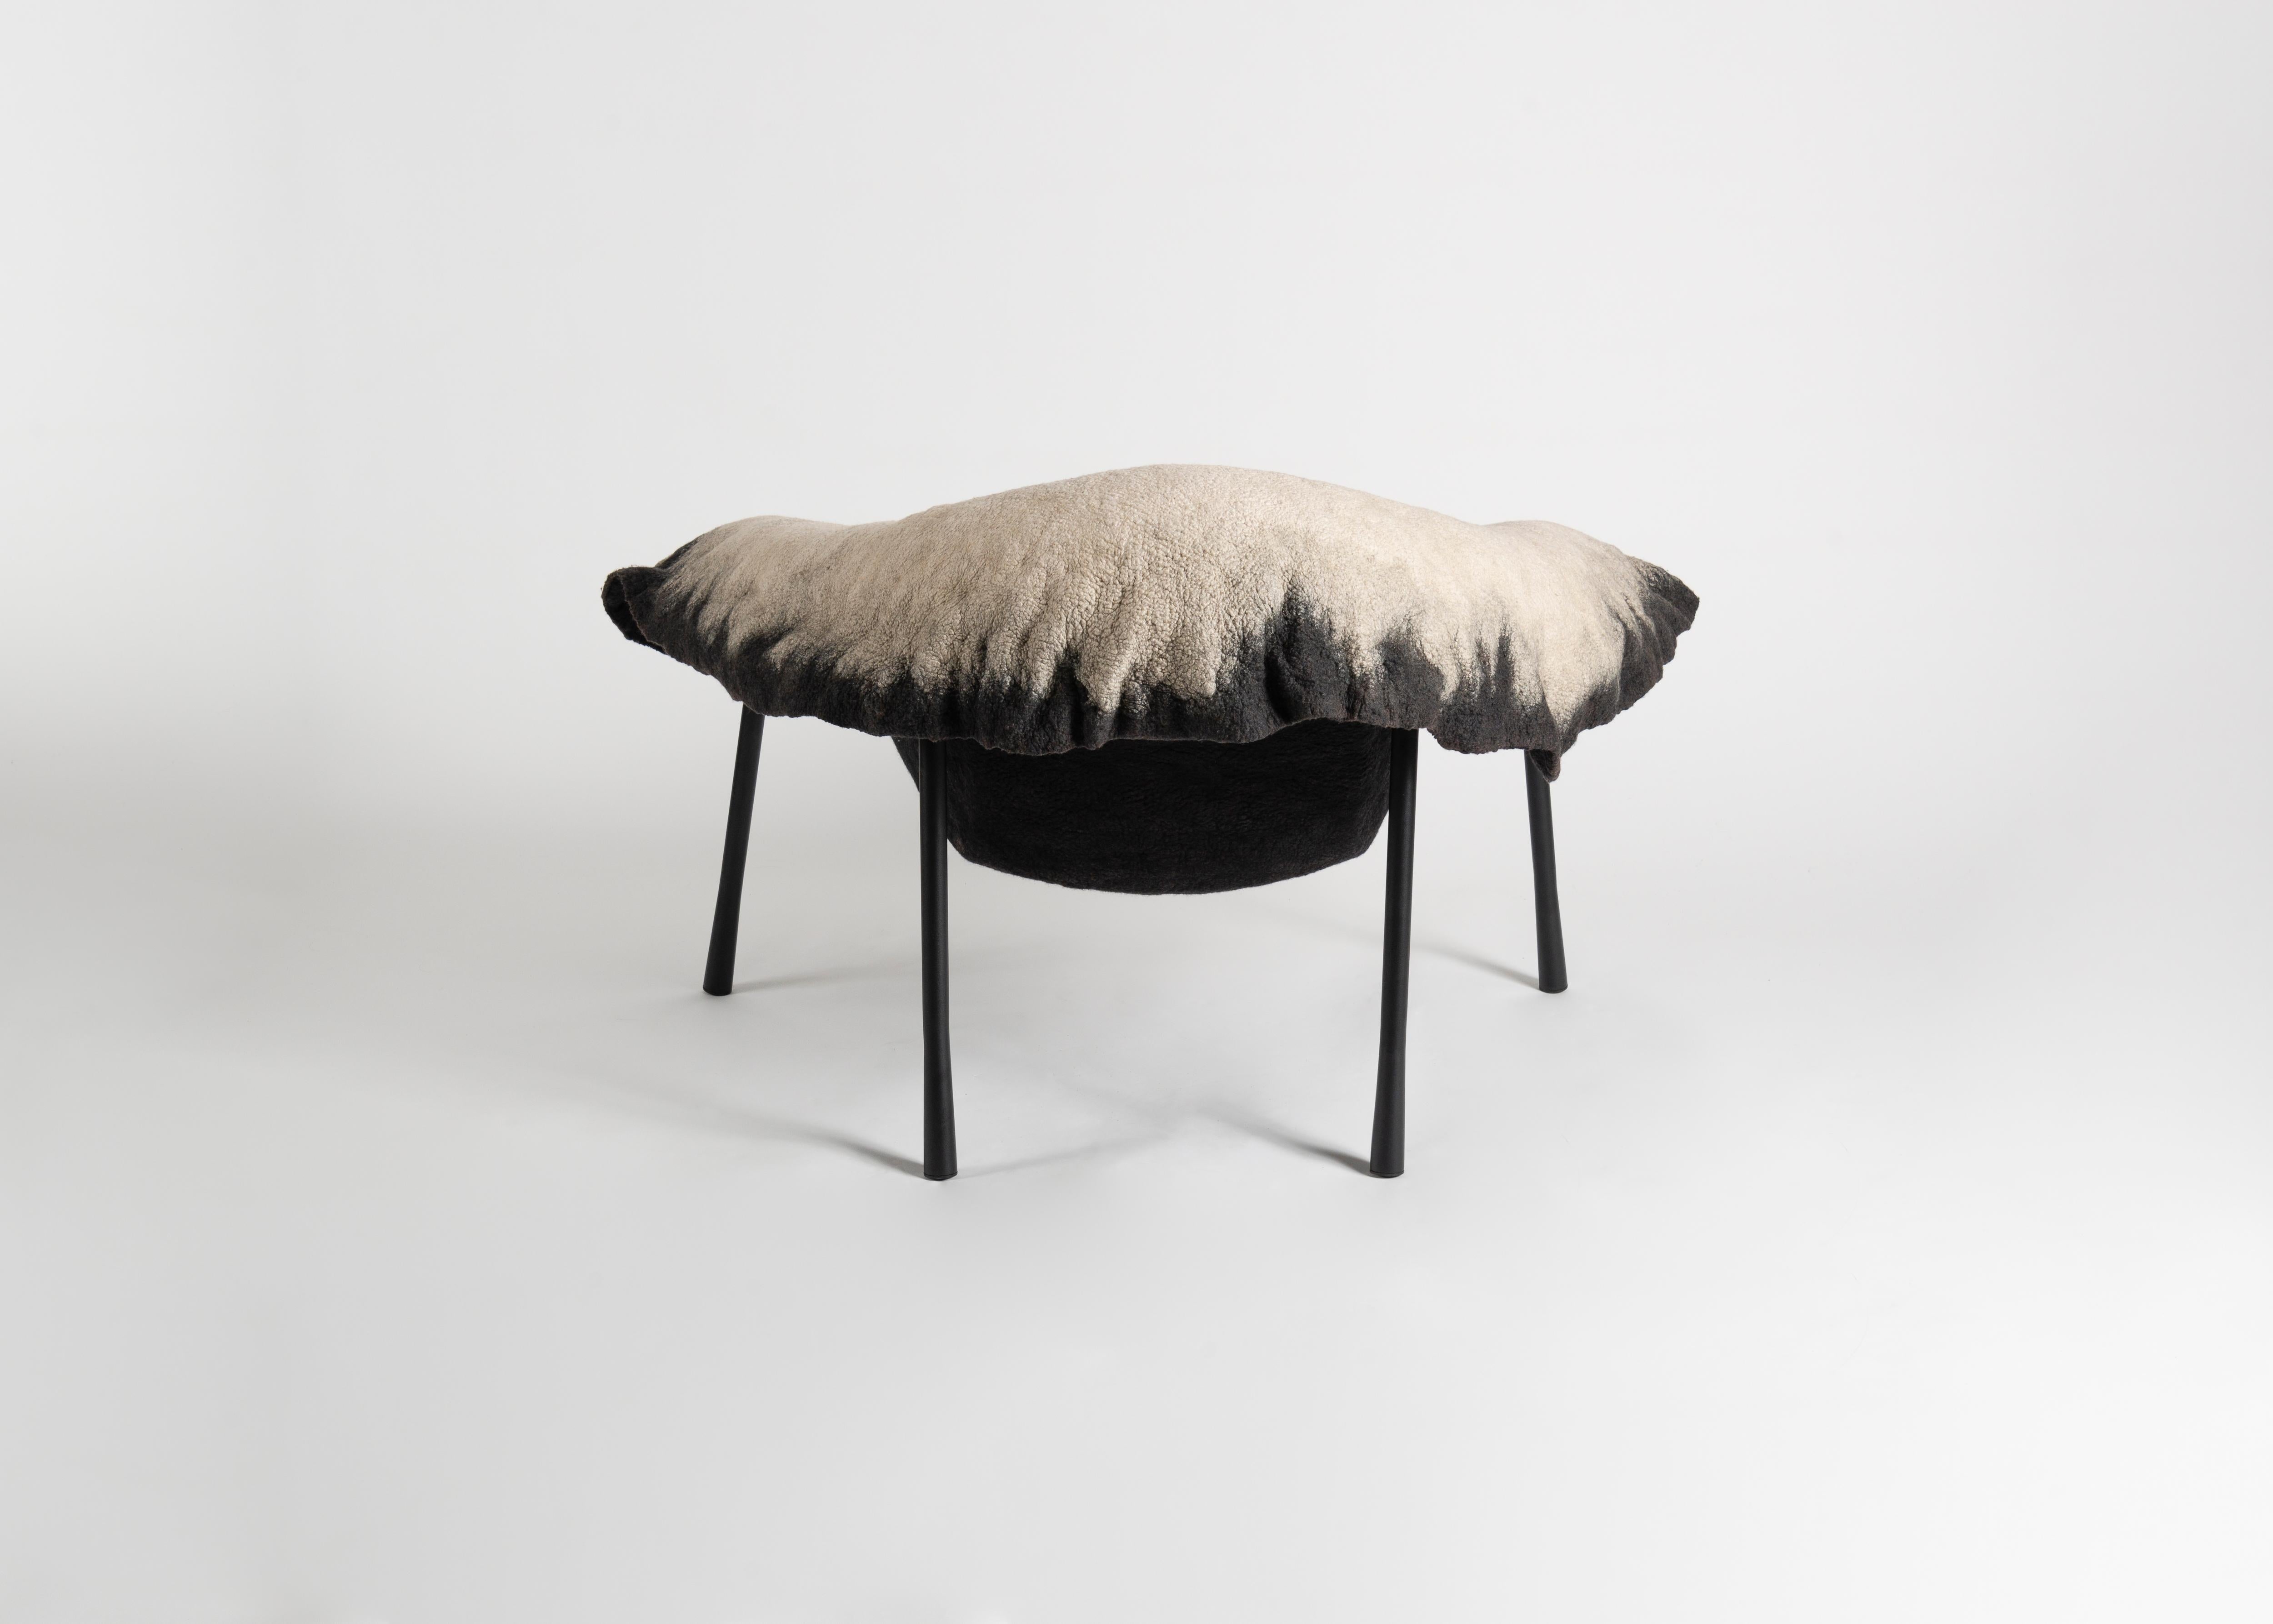 Wool Ayala Serfaty, Rapa Series: Dessa Leh, Contemporary Lounge Chair, Israel, 2017 For Sale